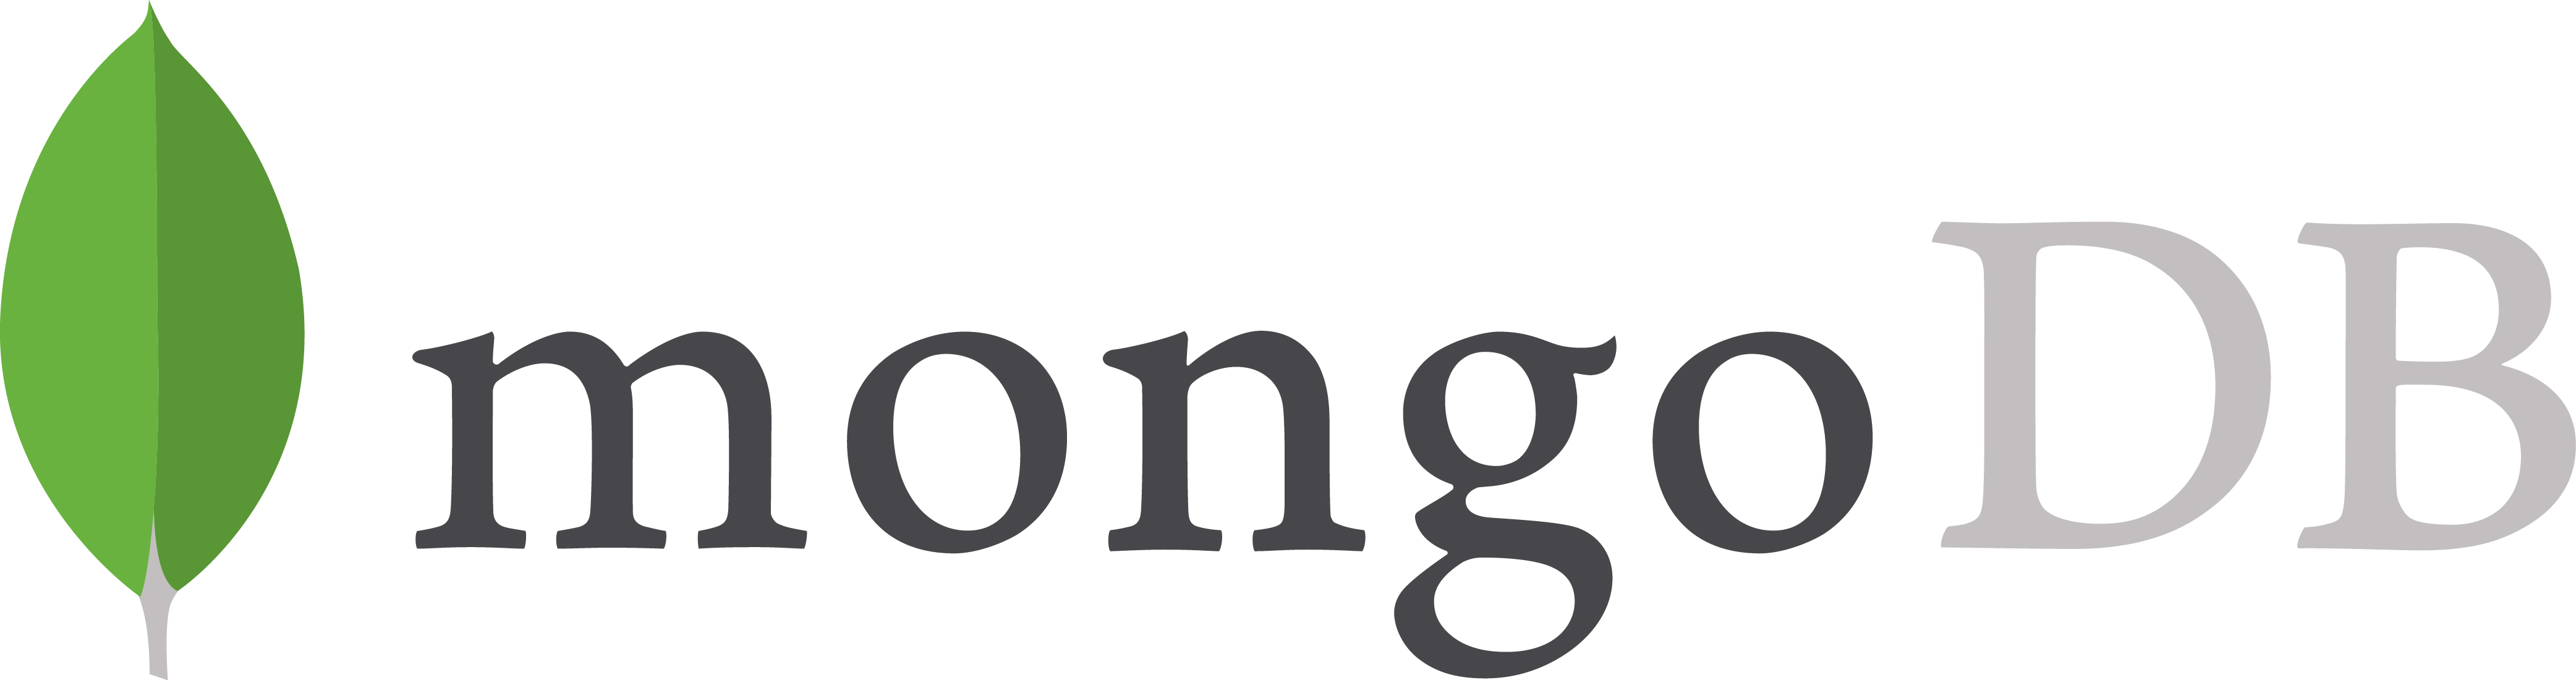 Standard Logo - Mongodb, Transparent background PNG HD thumbnail